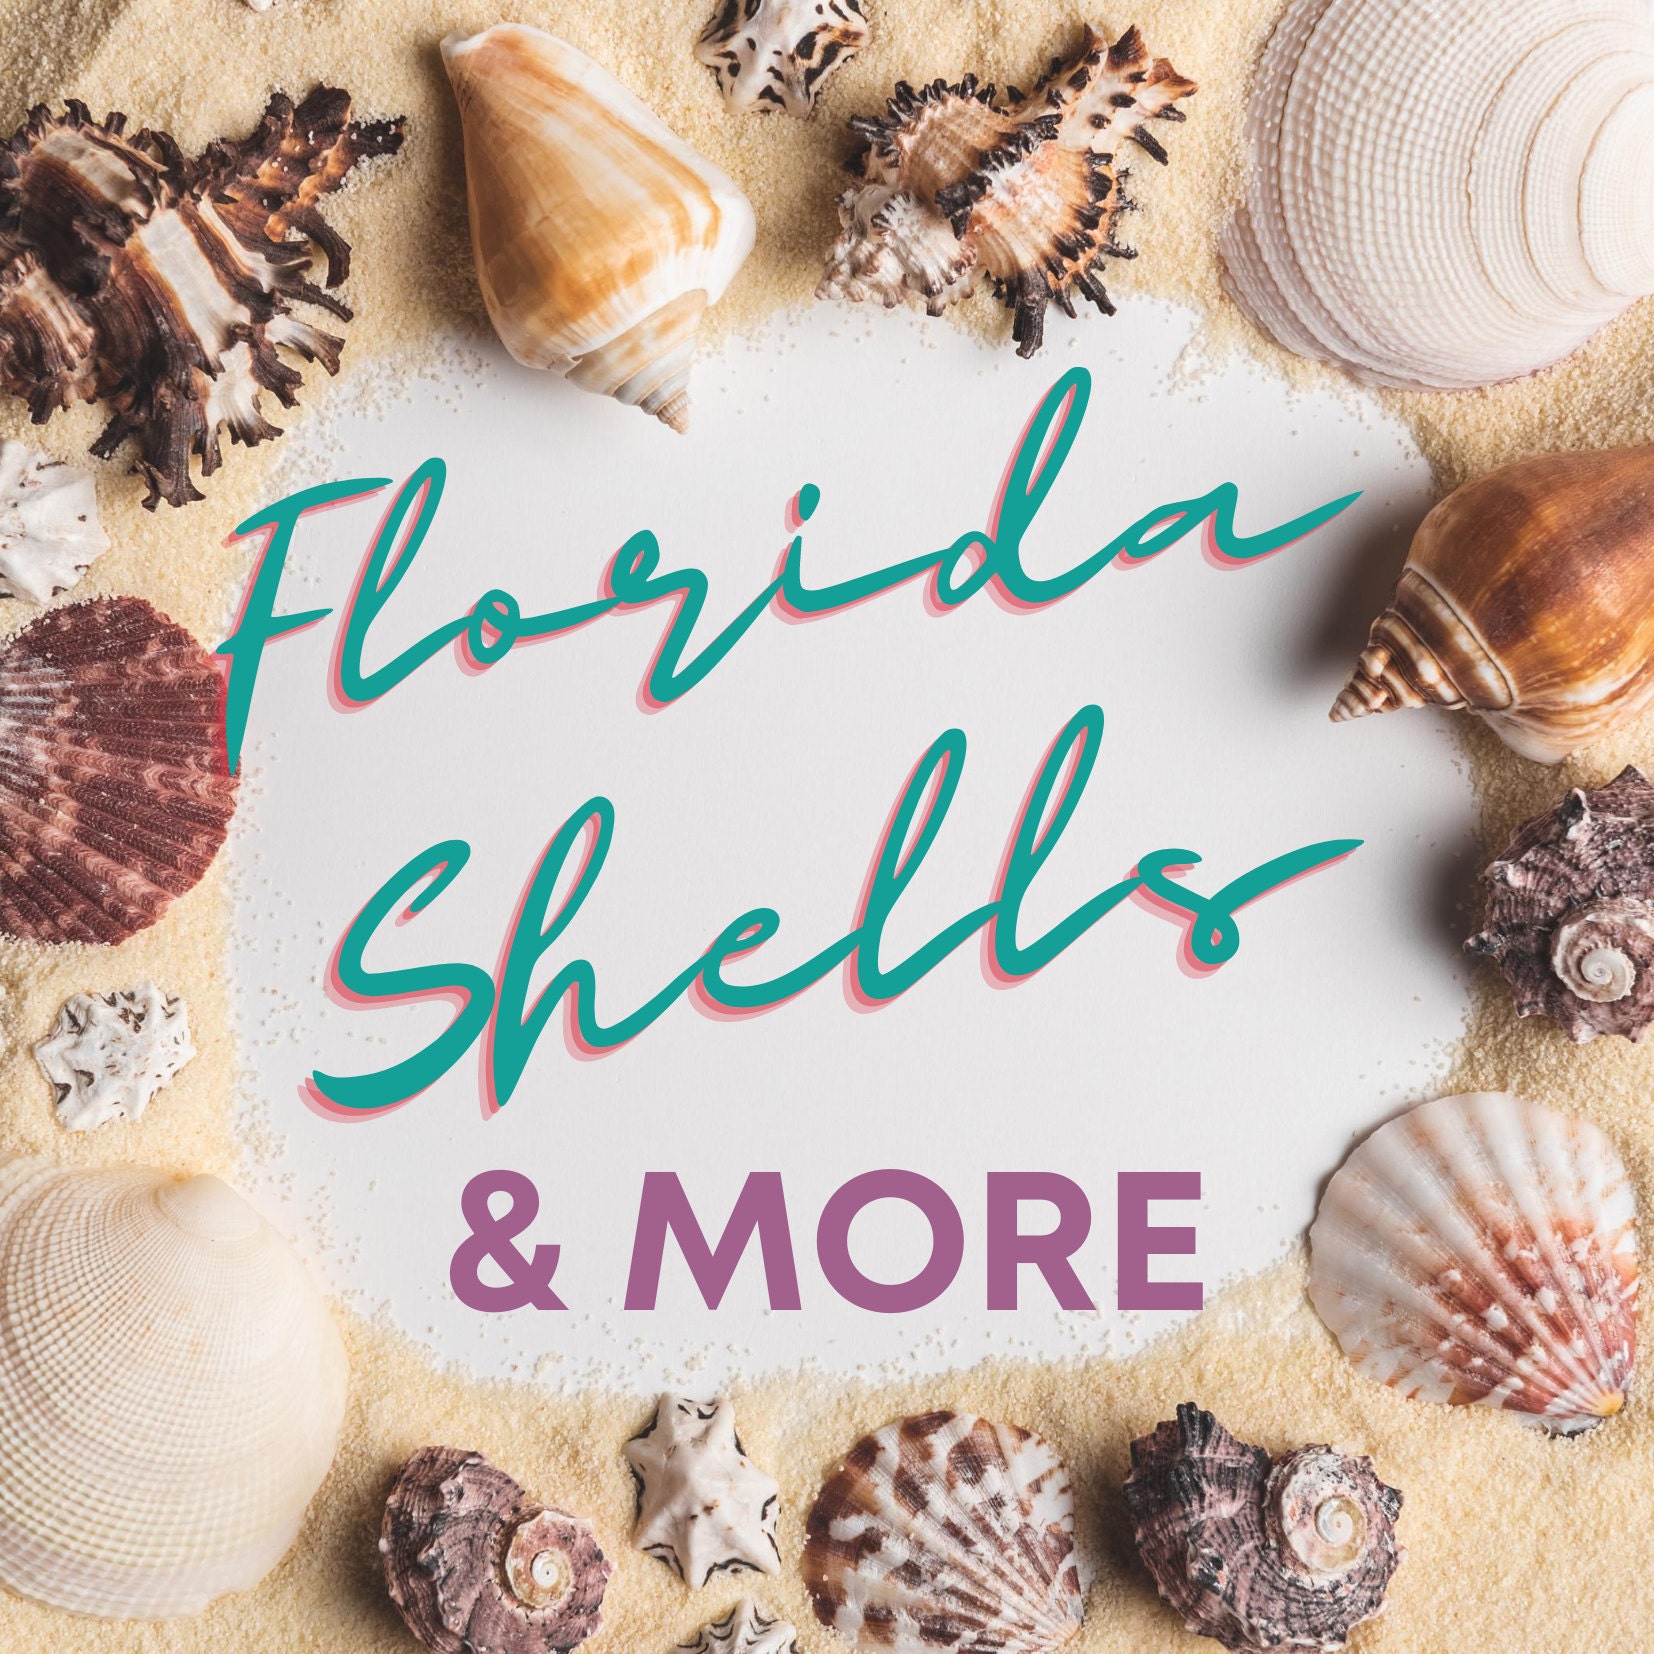 Akusety Mixed Beach Seashells, 1.2-3.6 Natural Seashells for Candle Making,Home Decorations, Beach Theme Party Wedding Decor, DIY Crafts, Fish